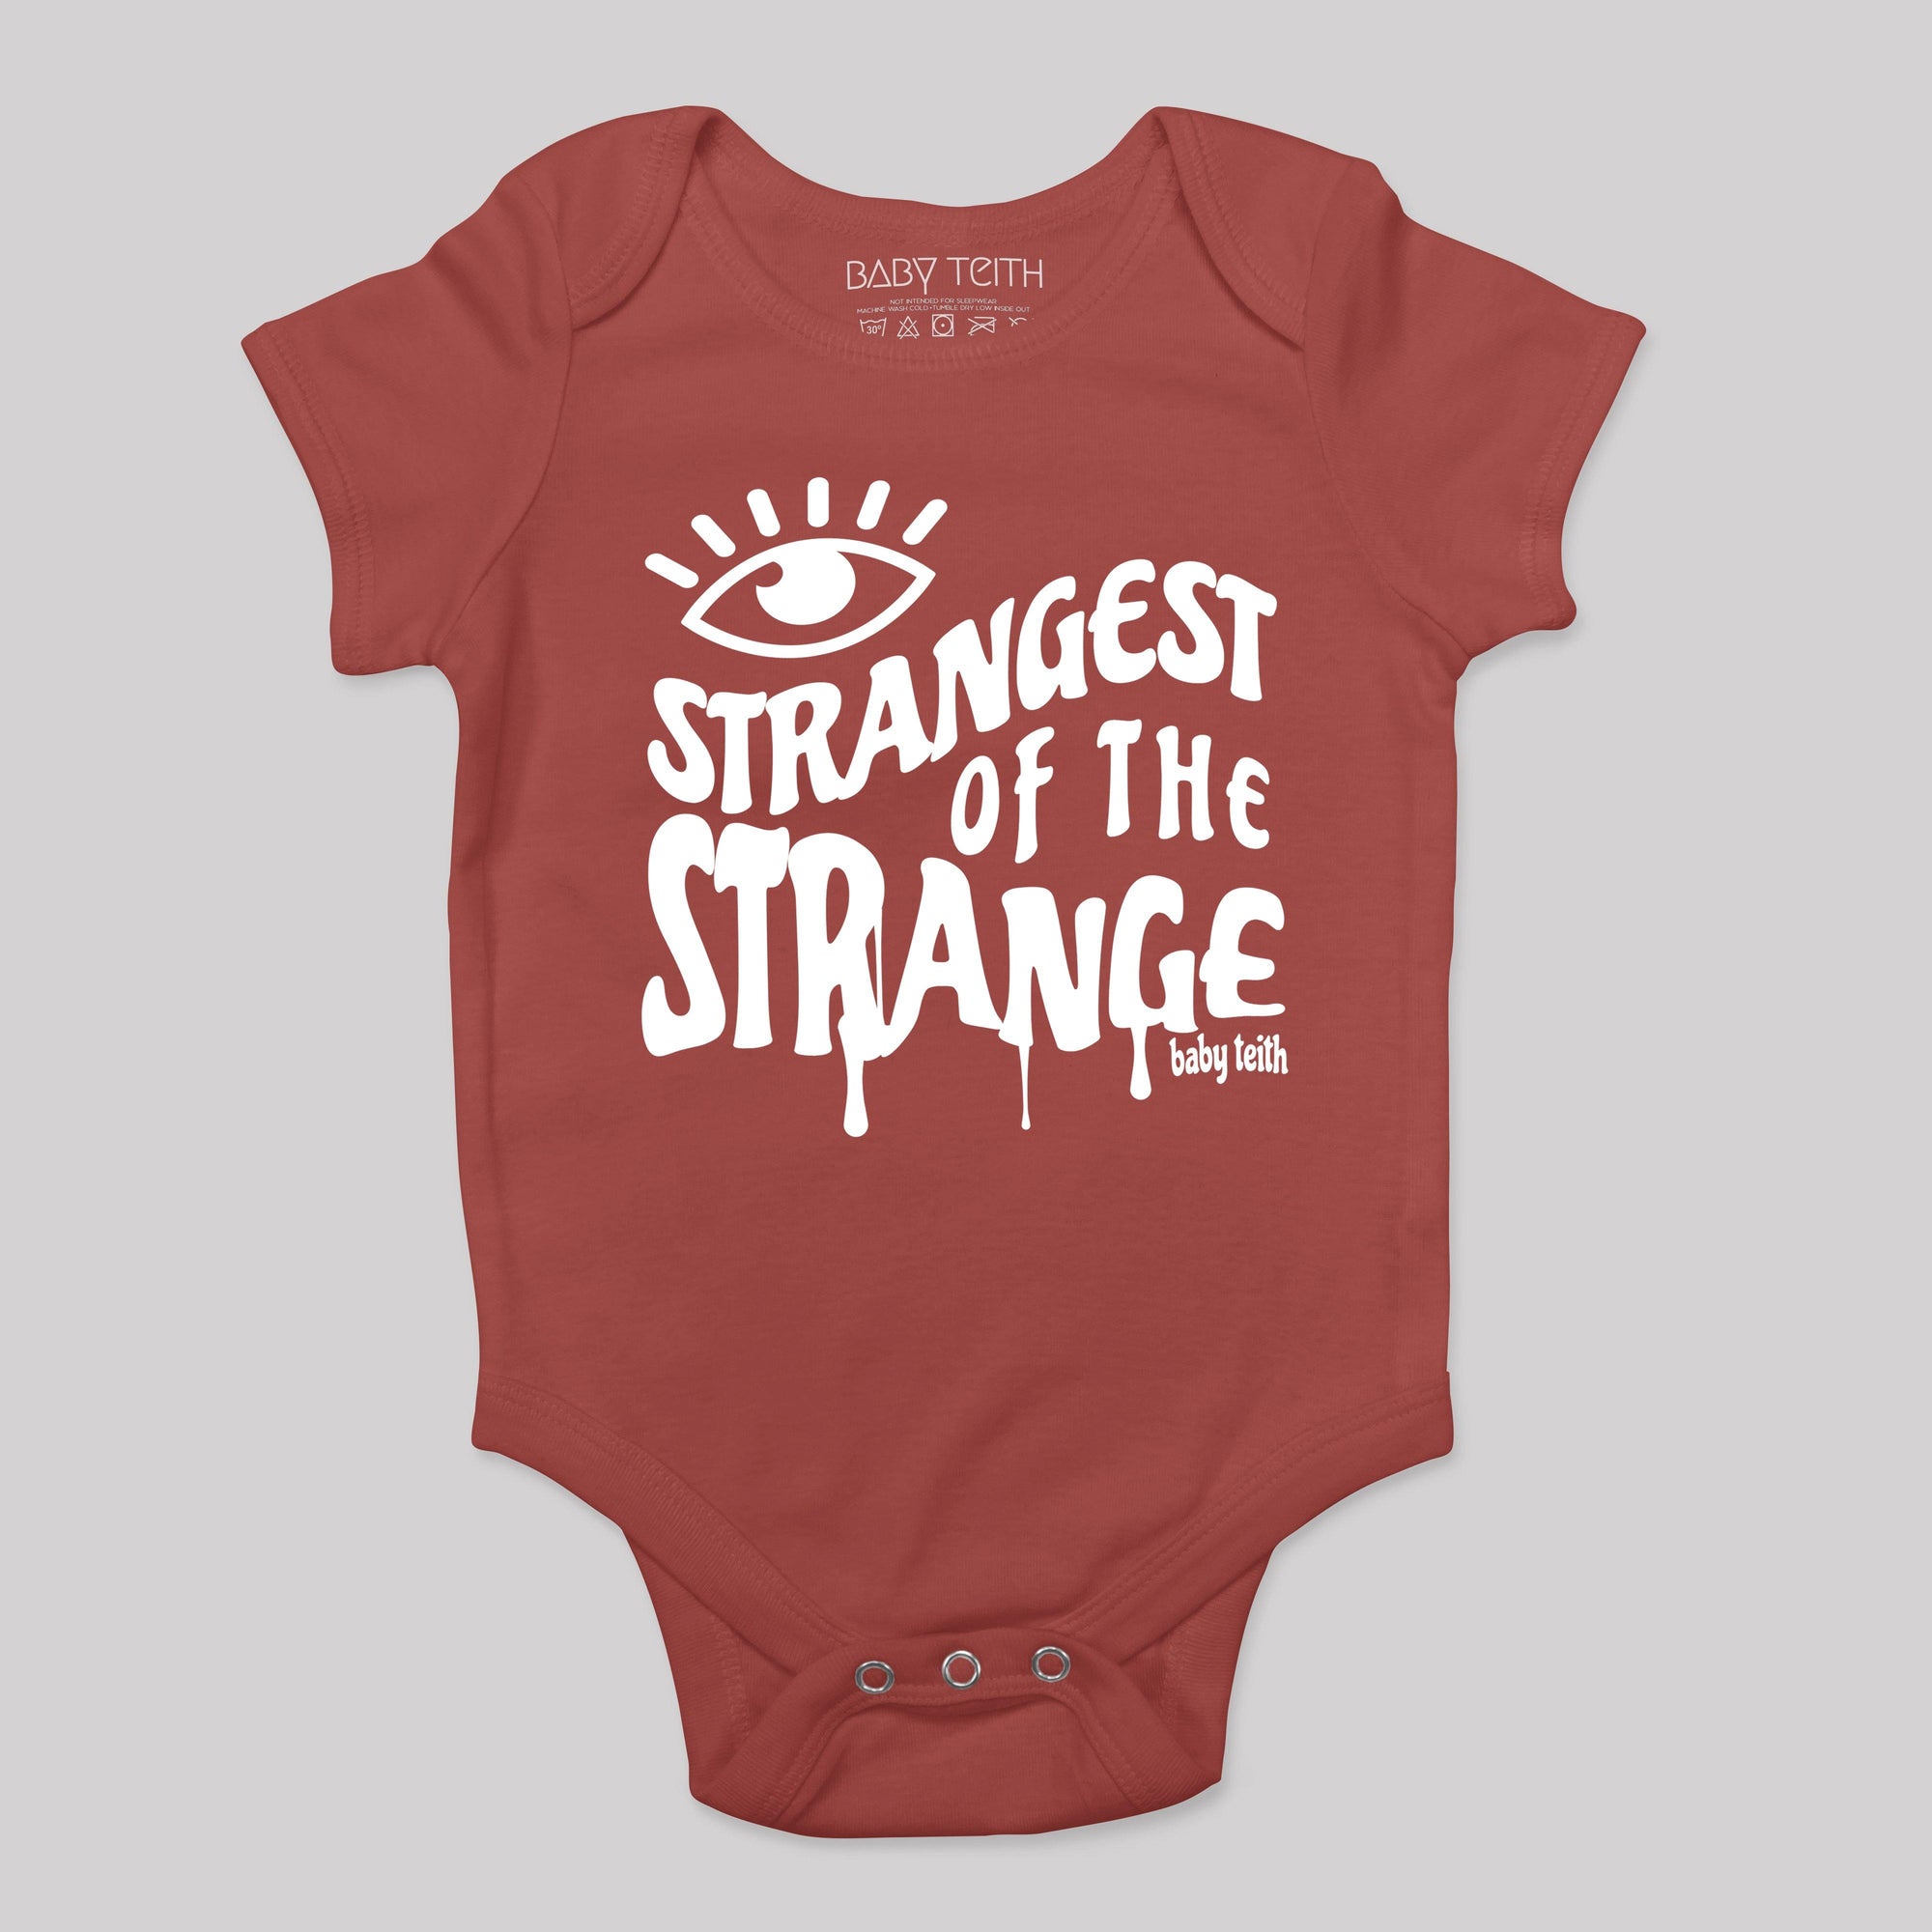 "Strangest of the Strange" Baby Bodysuit - Baby Teith